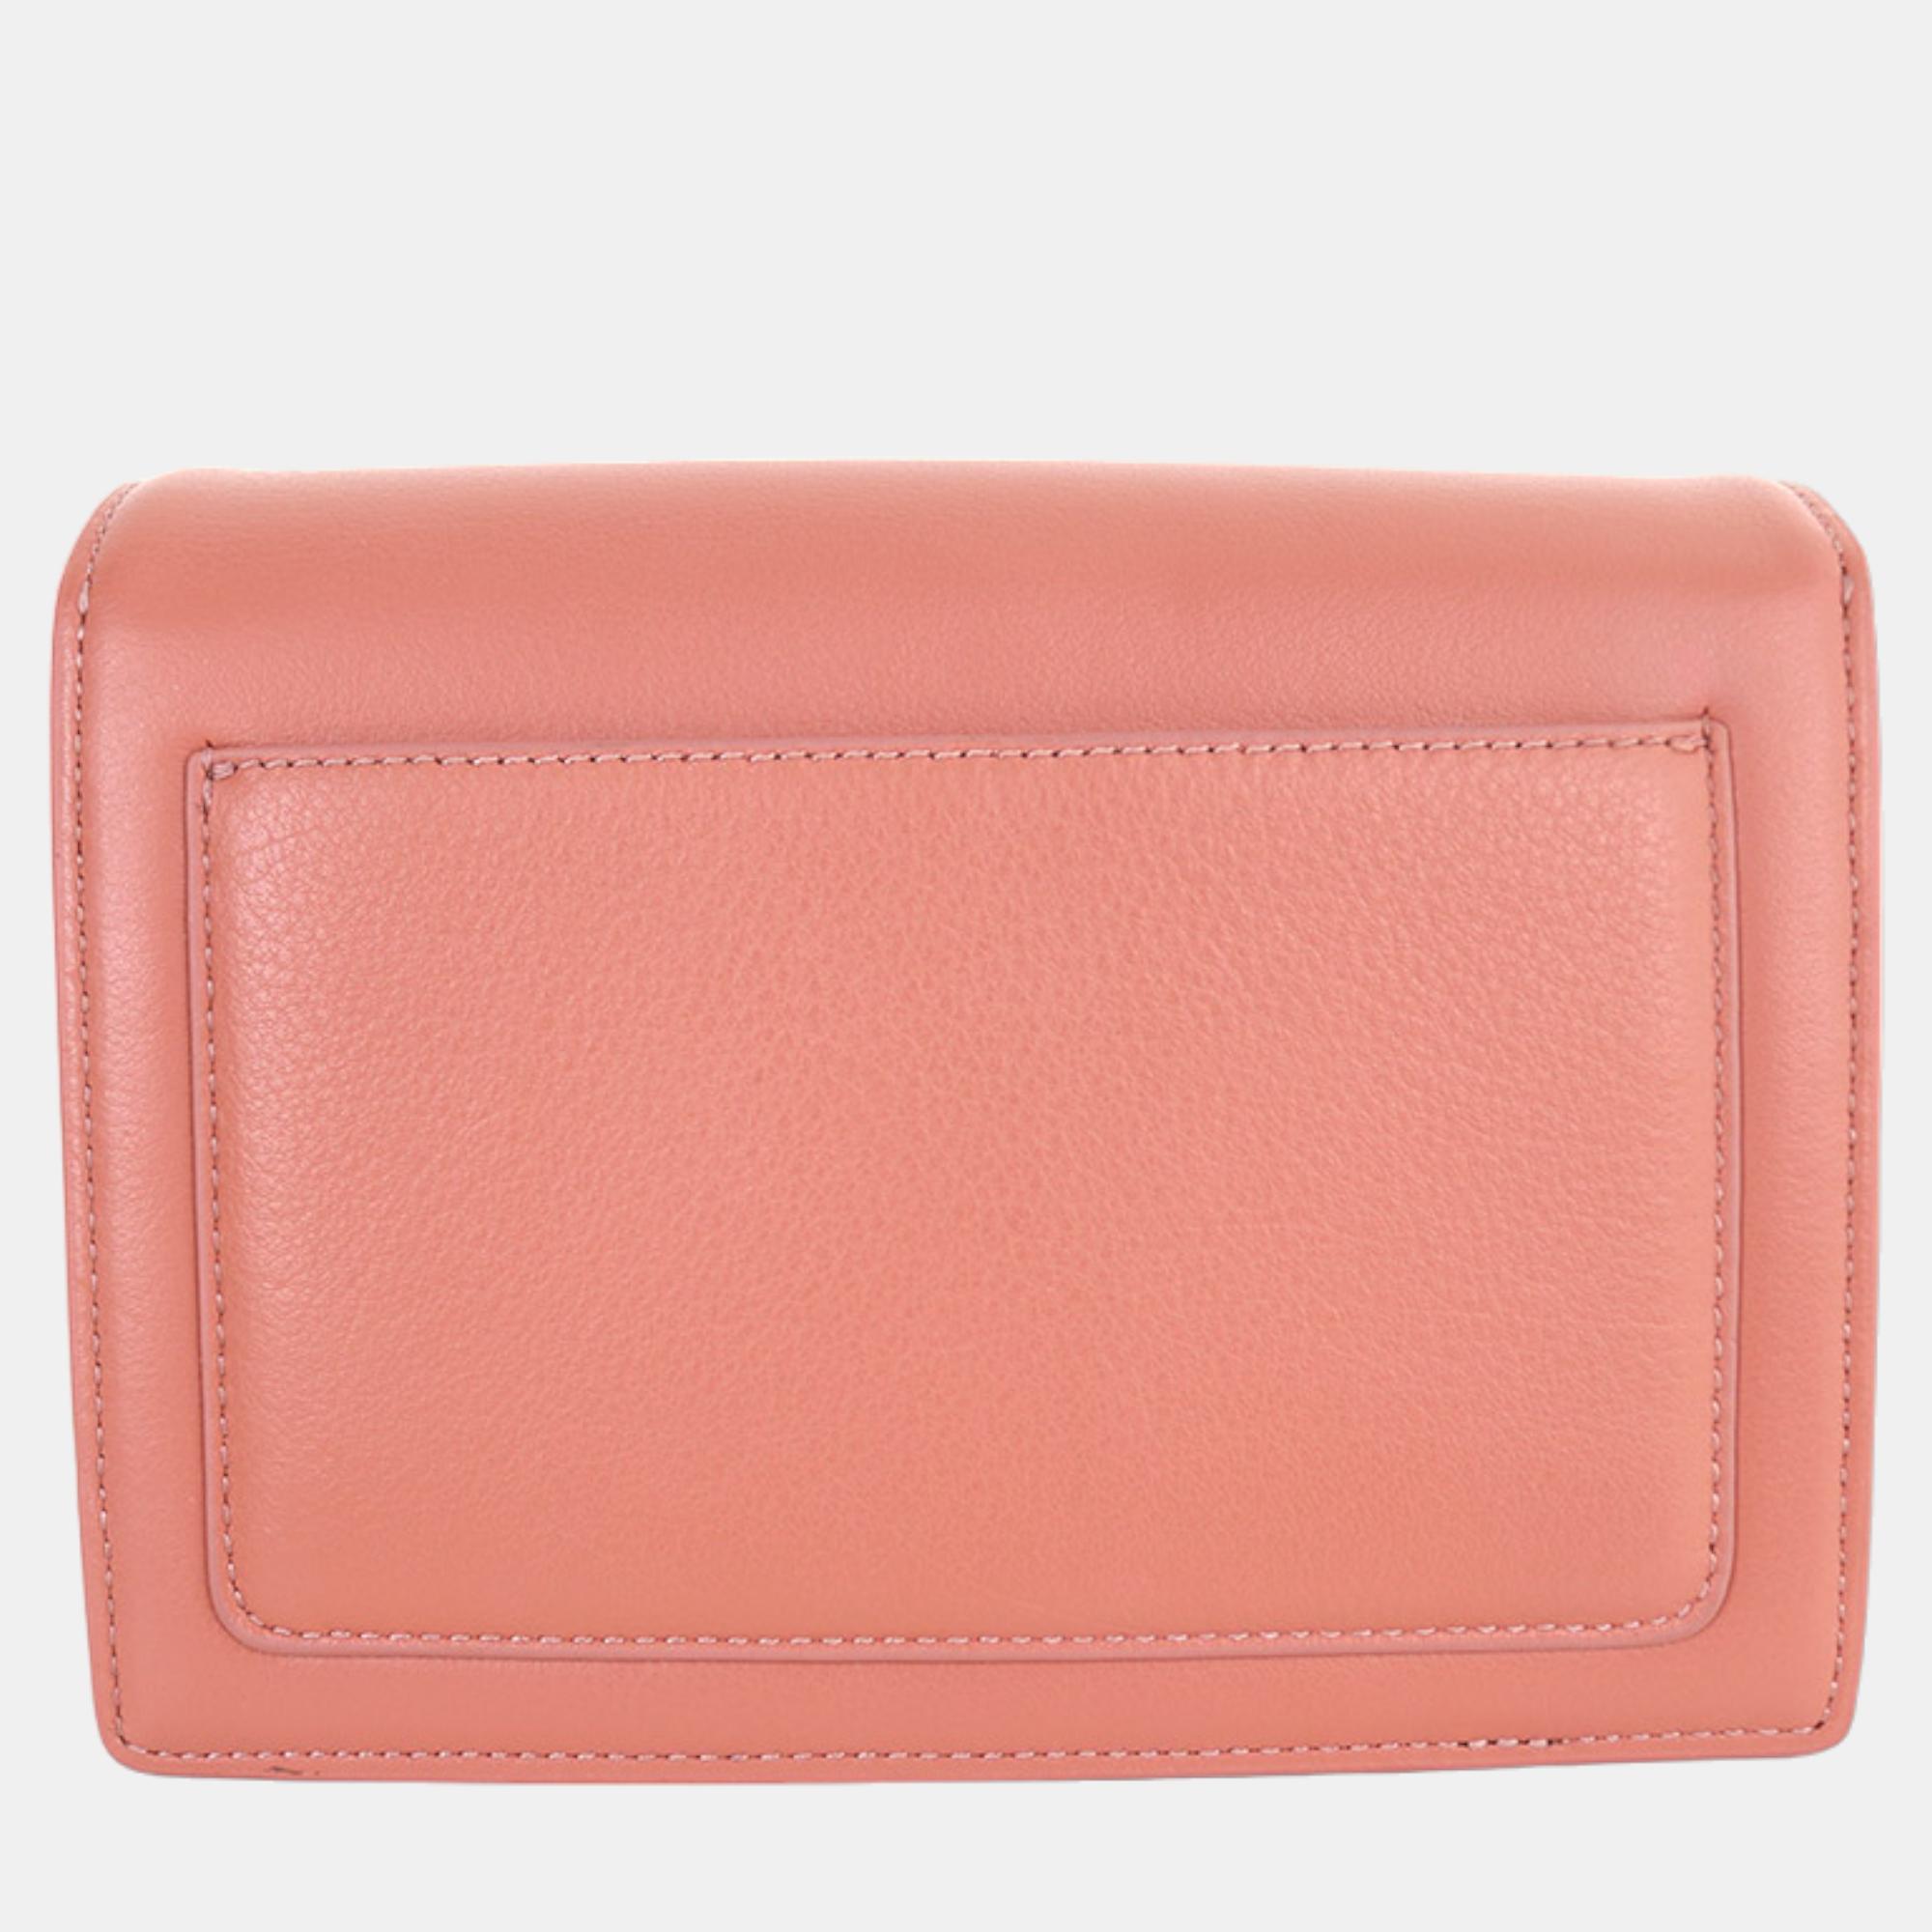 Charriol Light Brown Leather Twilight Handbag